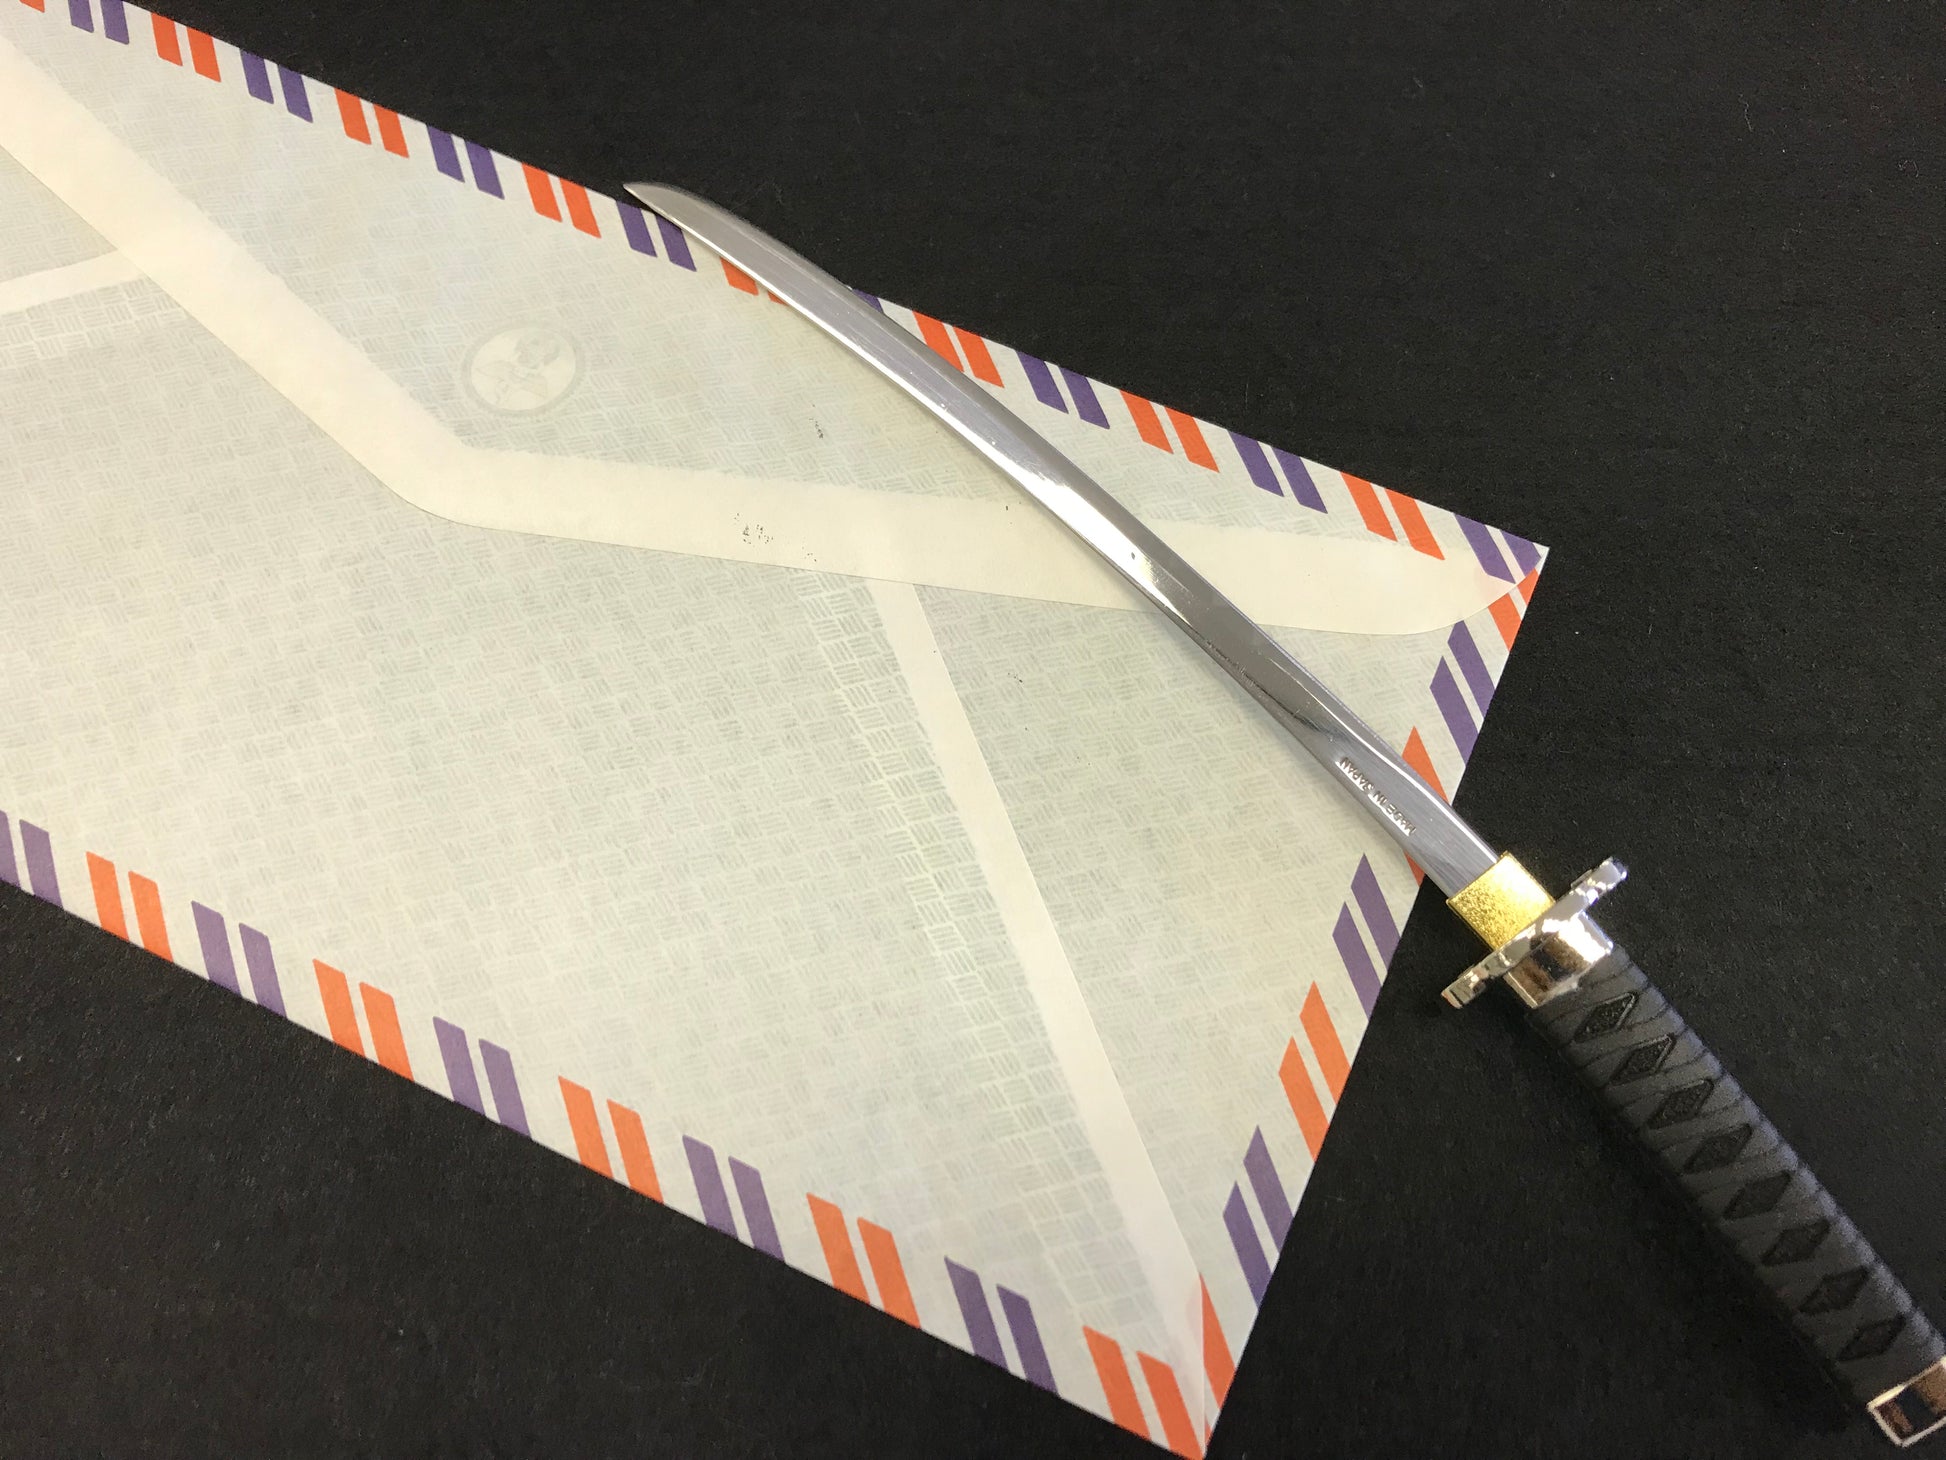 Letter Opener SAMURAI KATANA SWORD Knife Desk Decor item 8 inch Length Safe Edge Toyotomi Hideyoshi Model KT-22H - JAPANESE GIFTS 